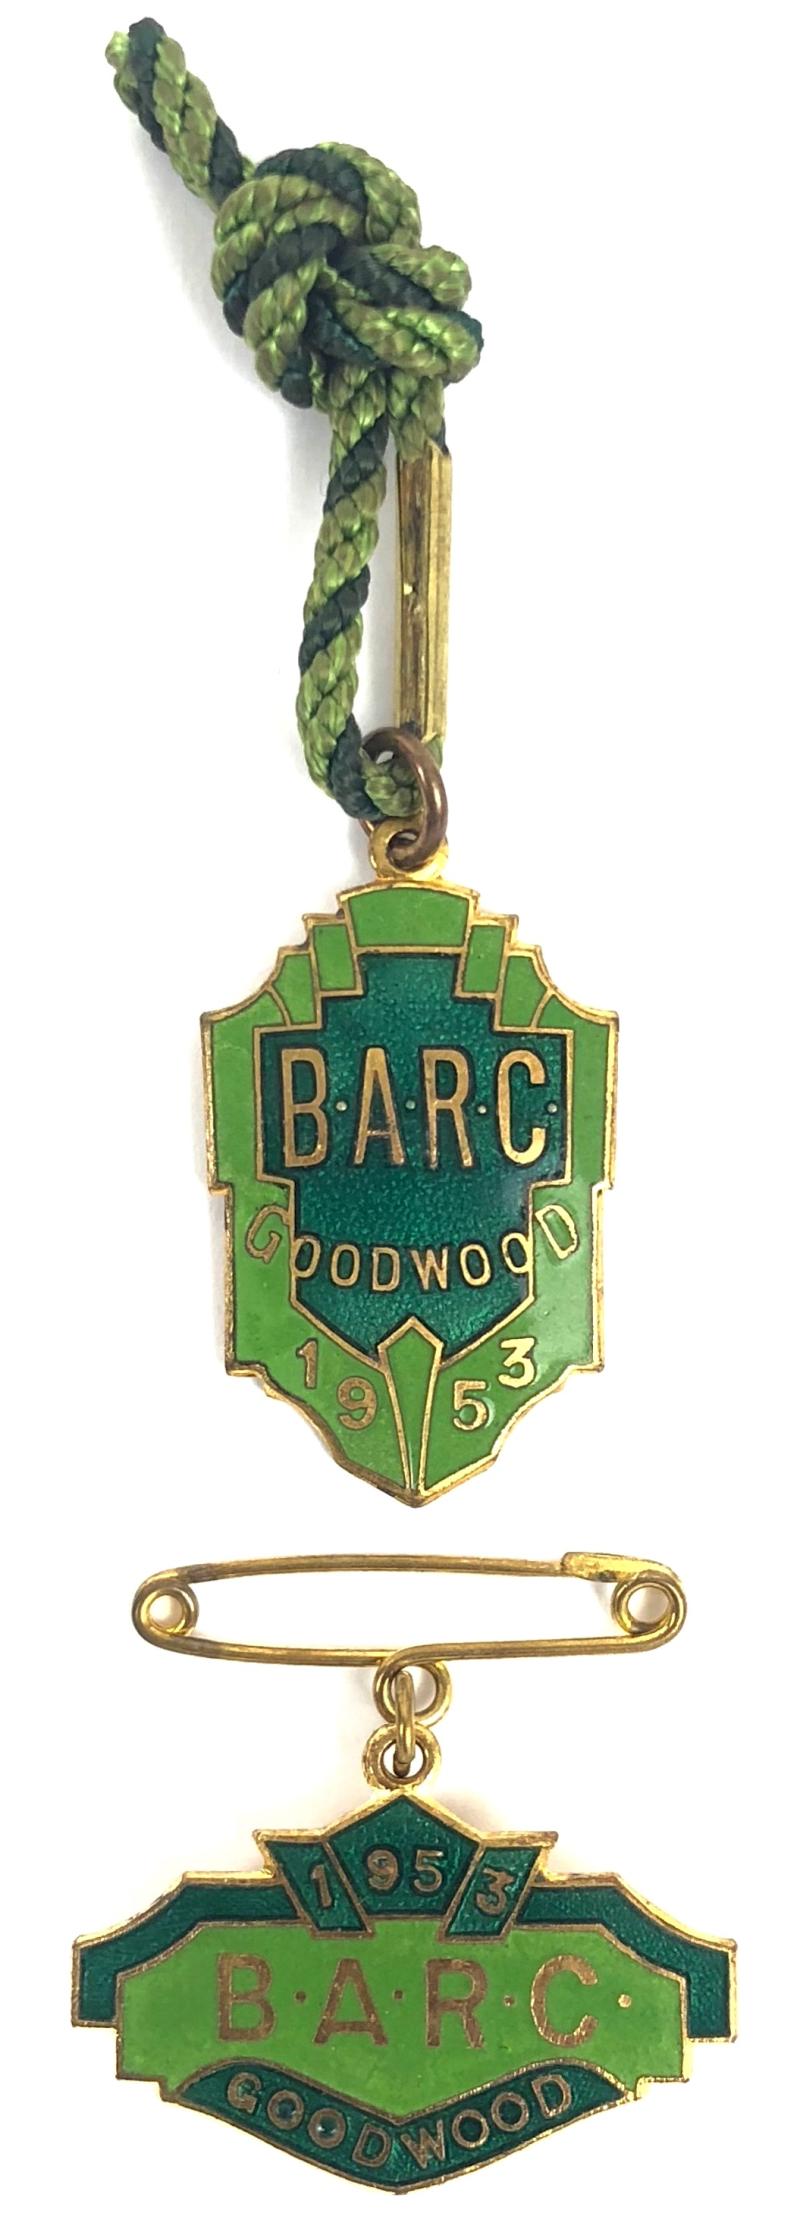 1953 Goodwood BARC Goodwood membership badge & guest